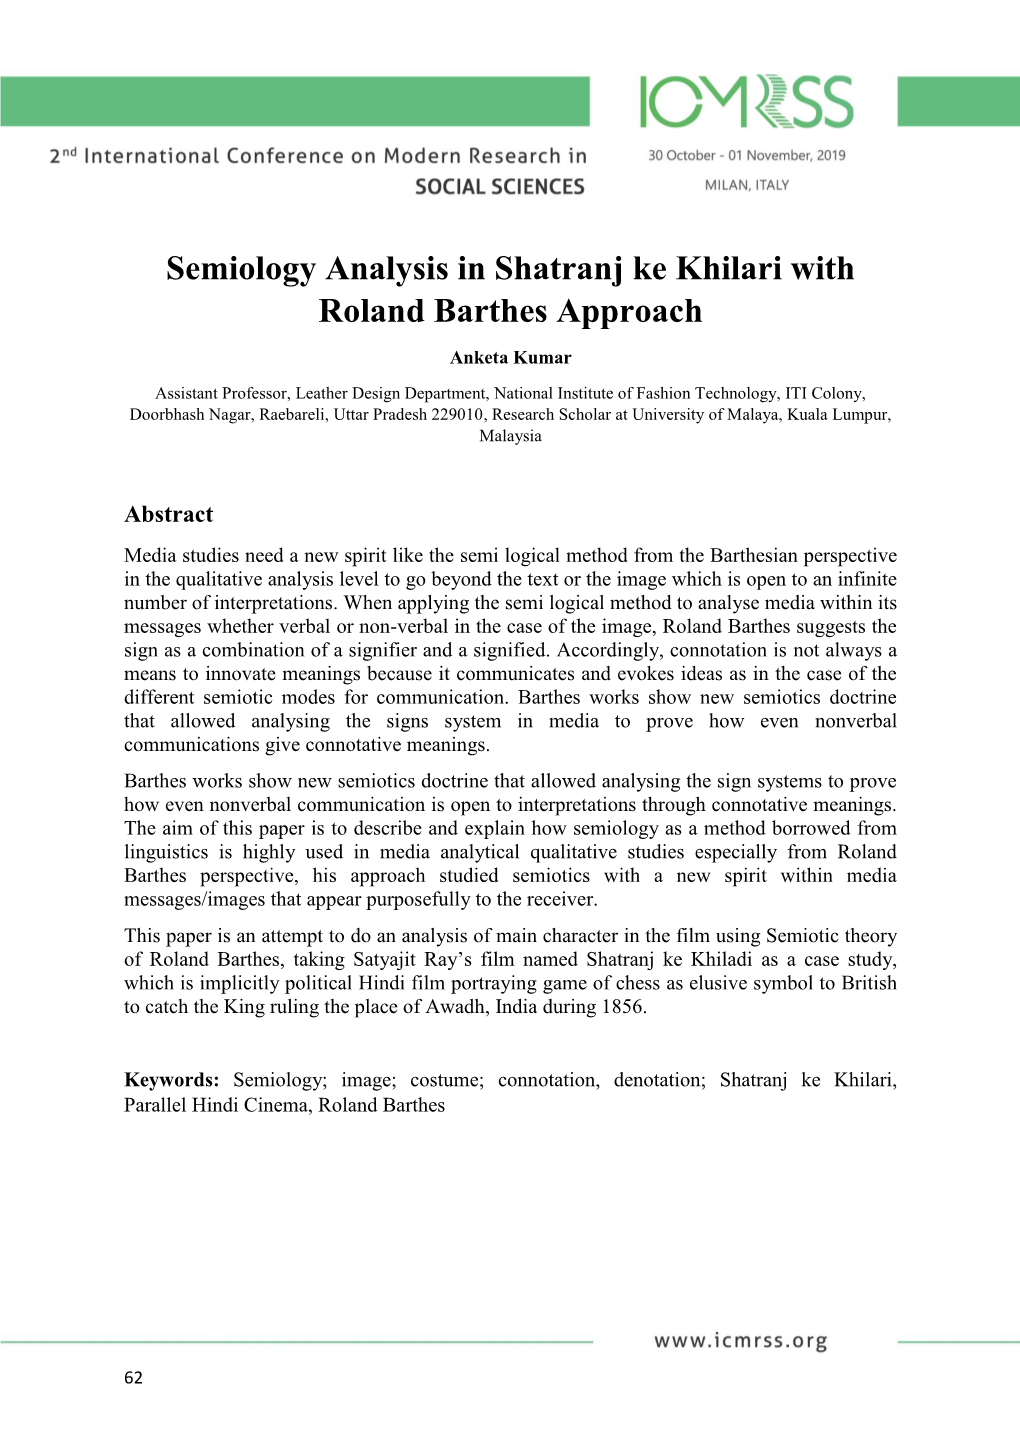 Semiology Analysis in Shatranj Ke Khilari with Roland Barthes Approach